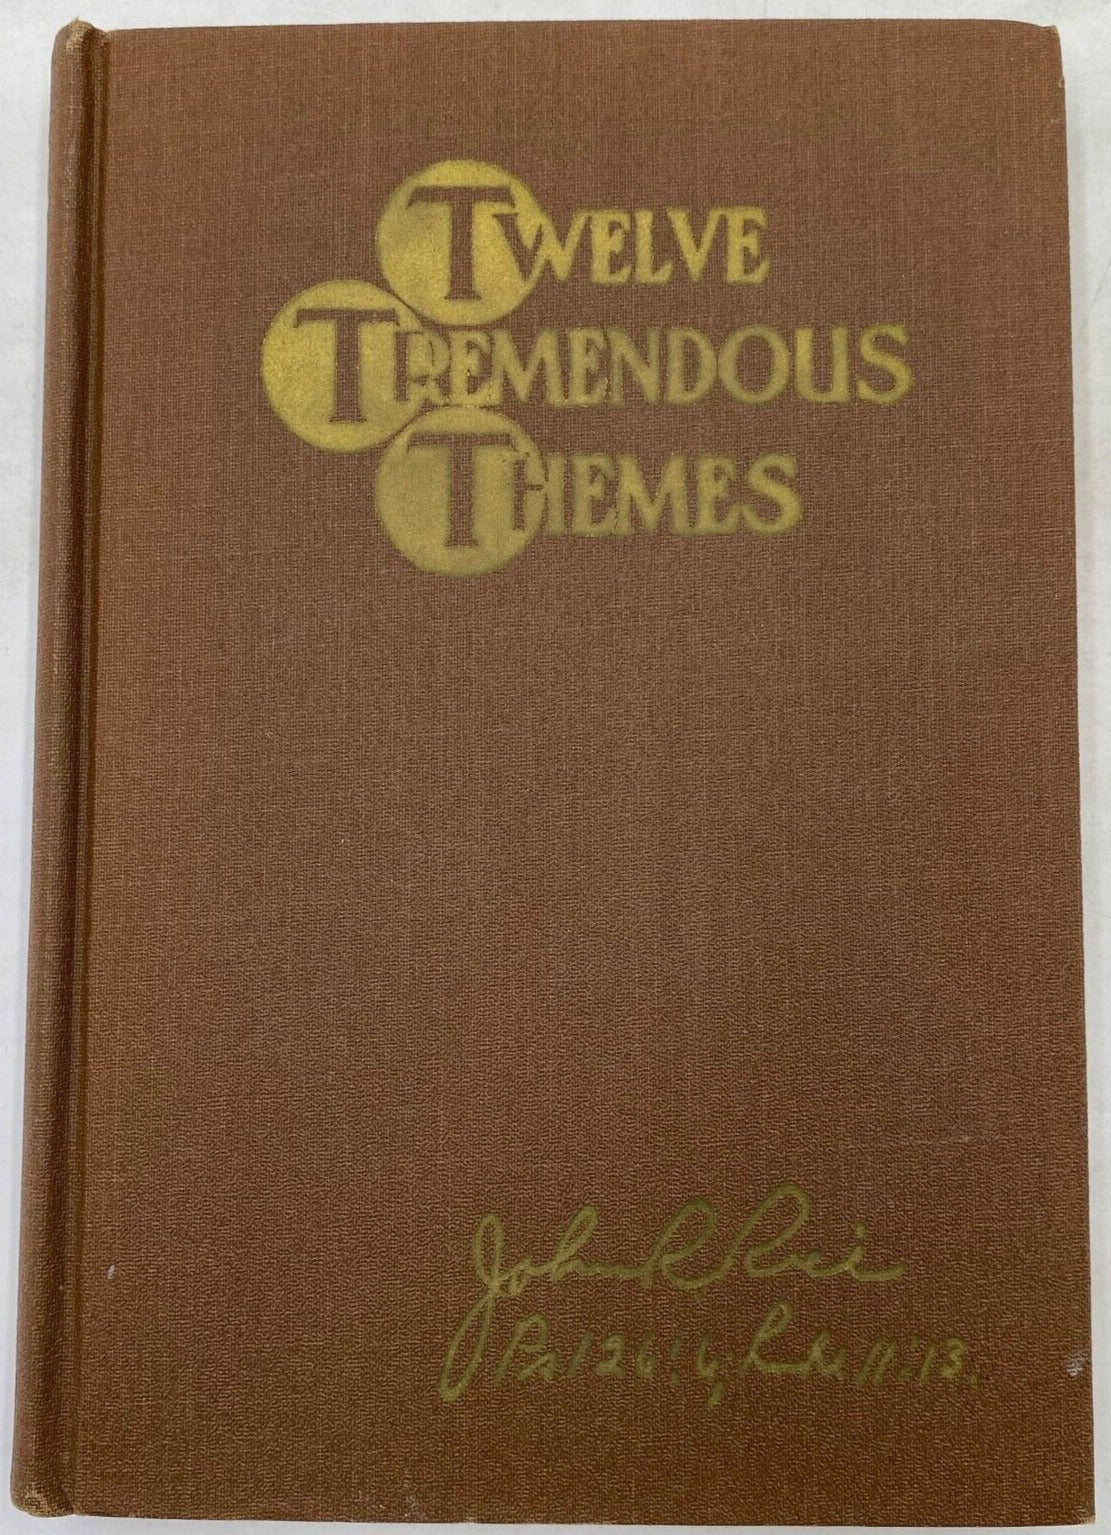 Twelve Tremendous Themes by John R. Rice (1946 Hardcover)